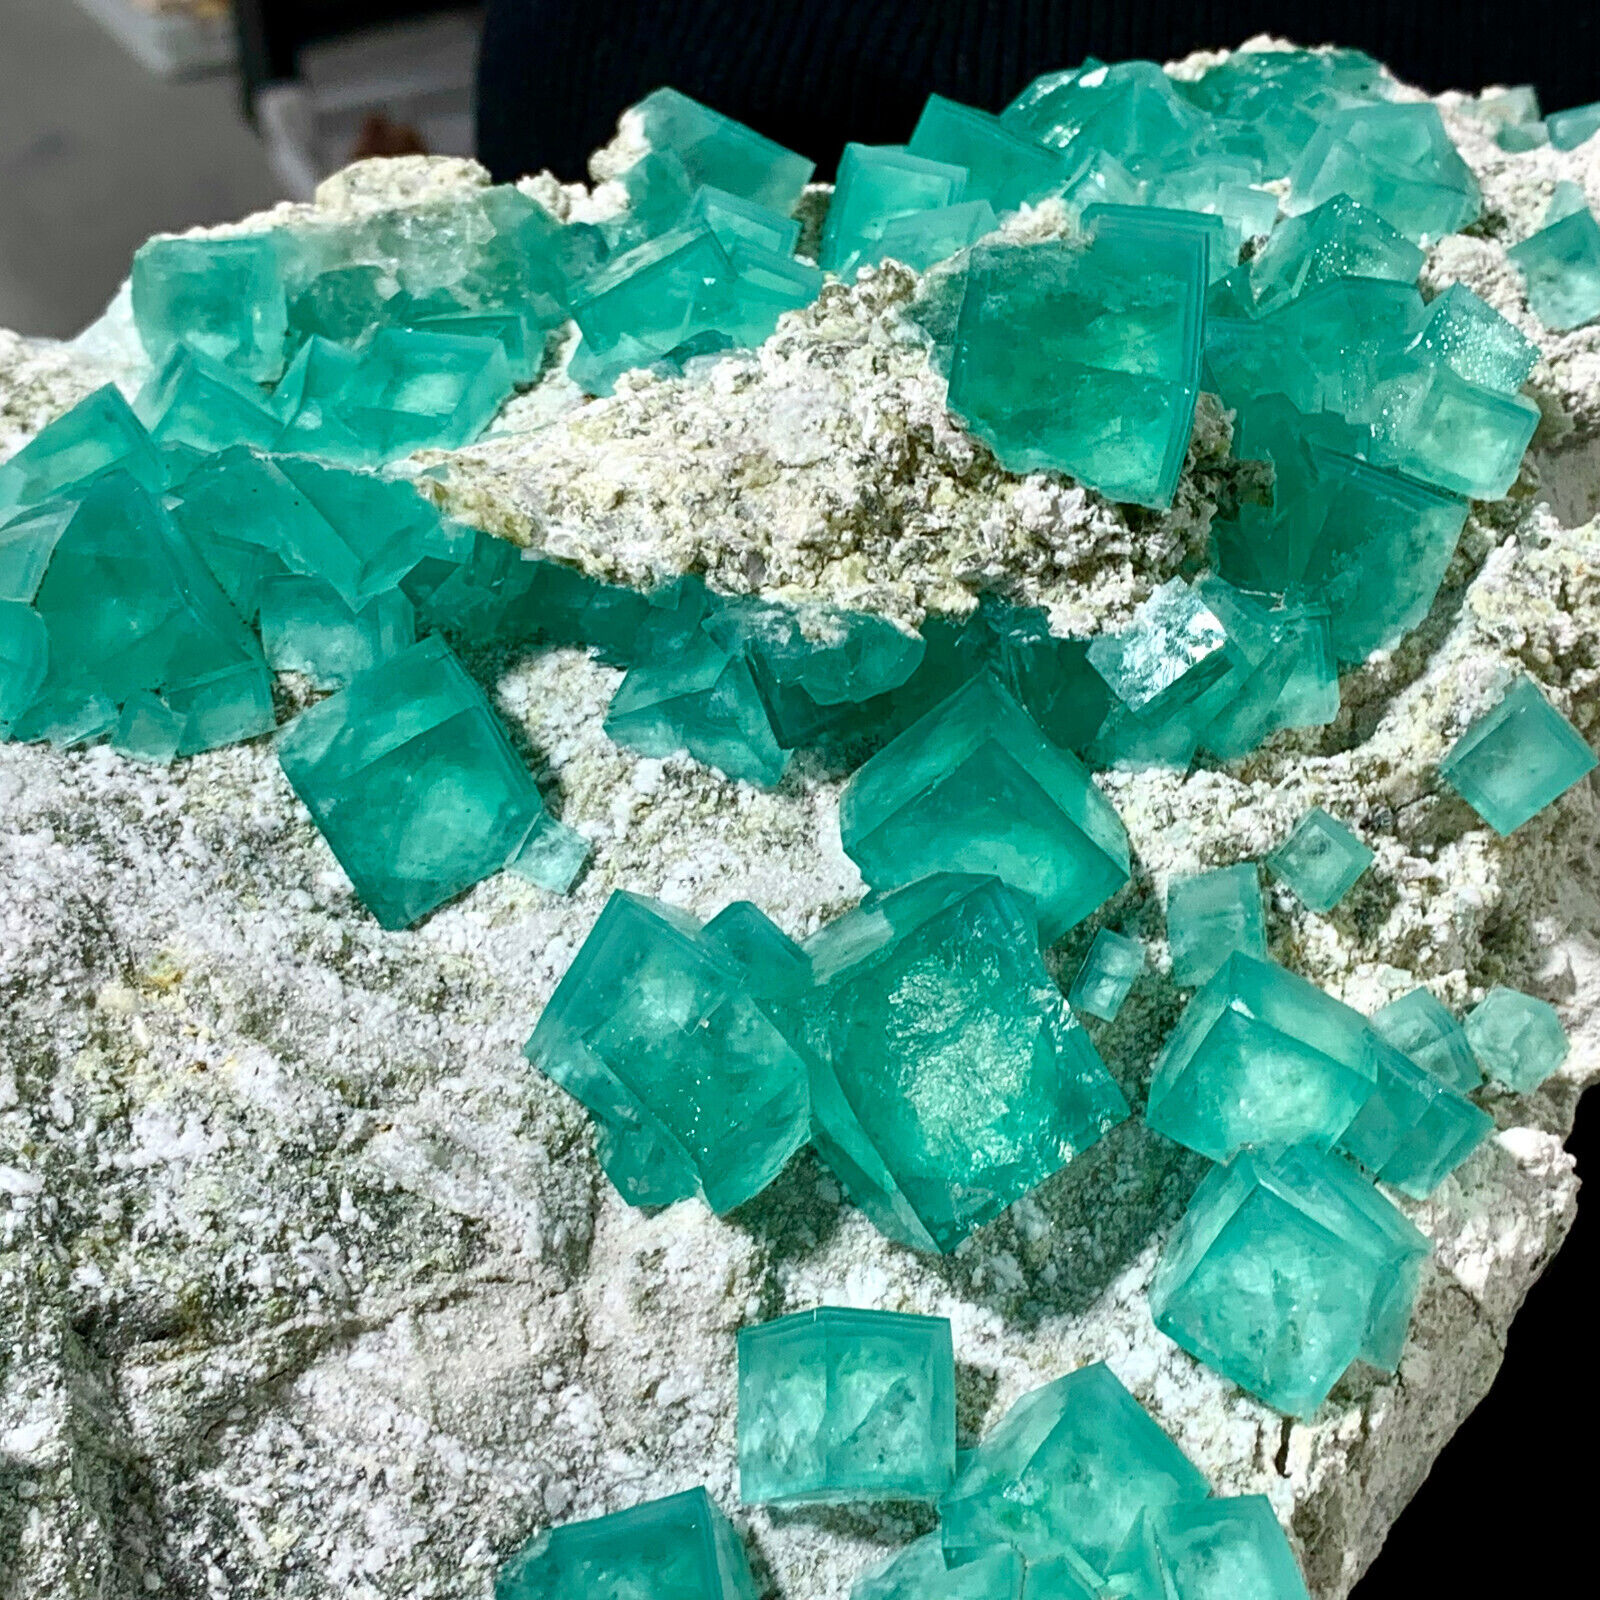 22LB Rare Transparent Green Cube Fluorite Mineral Crystal Specimen/Chin